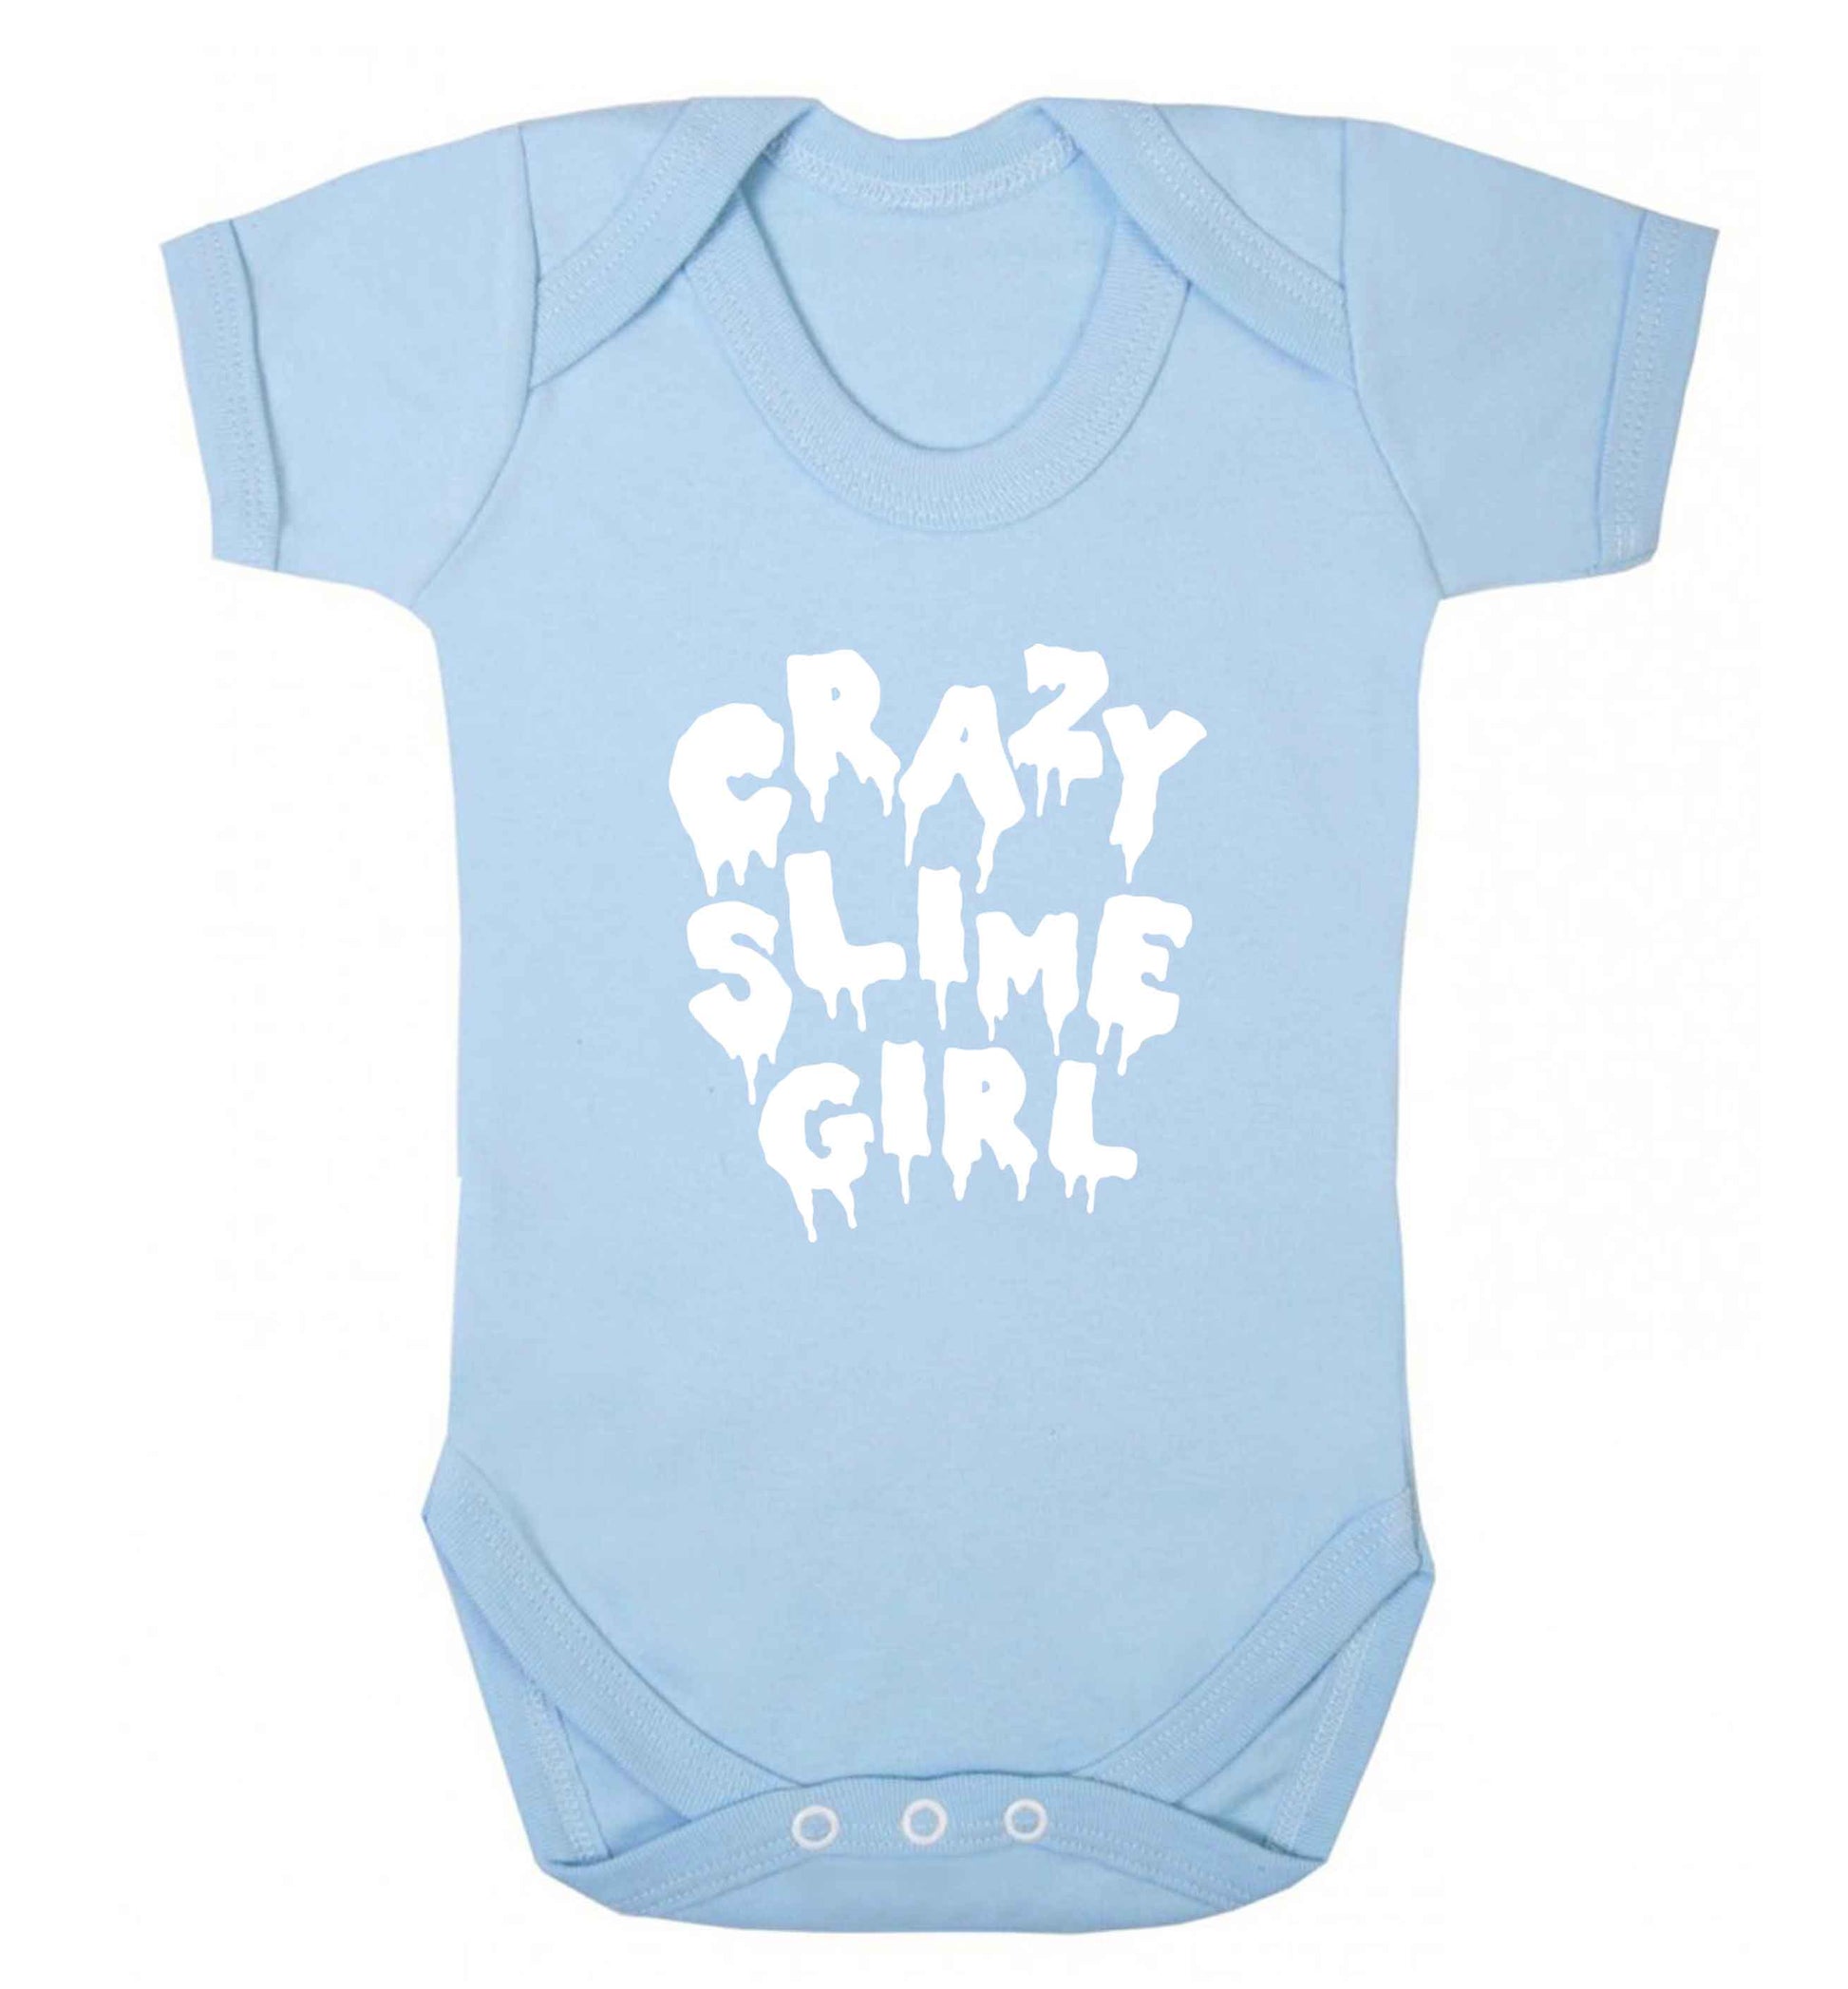 Crazy slime girl baby vest pale blue 18-24 months